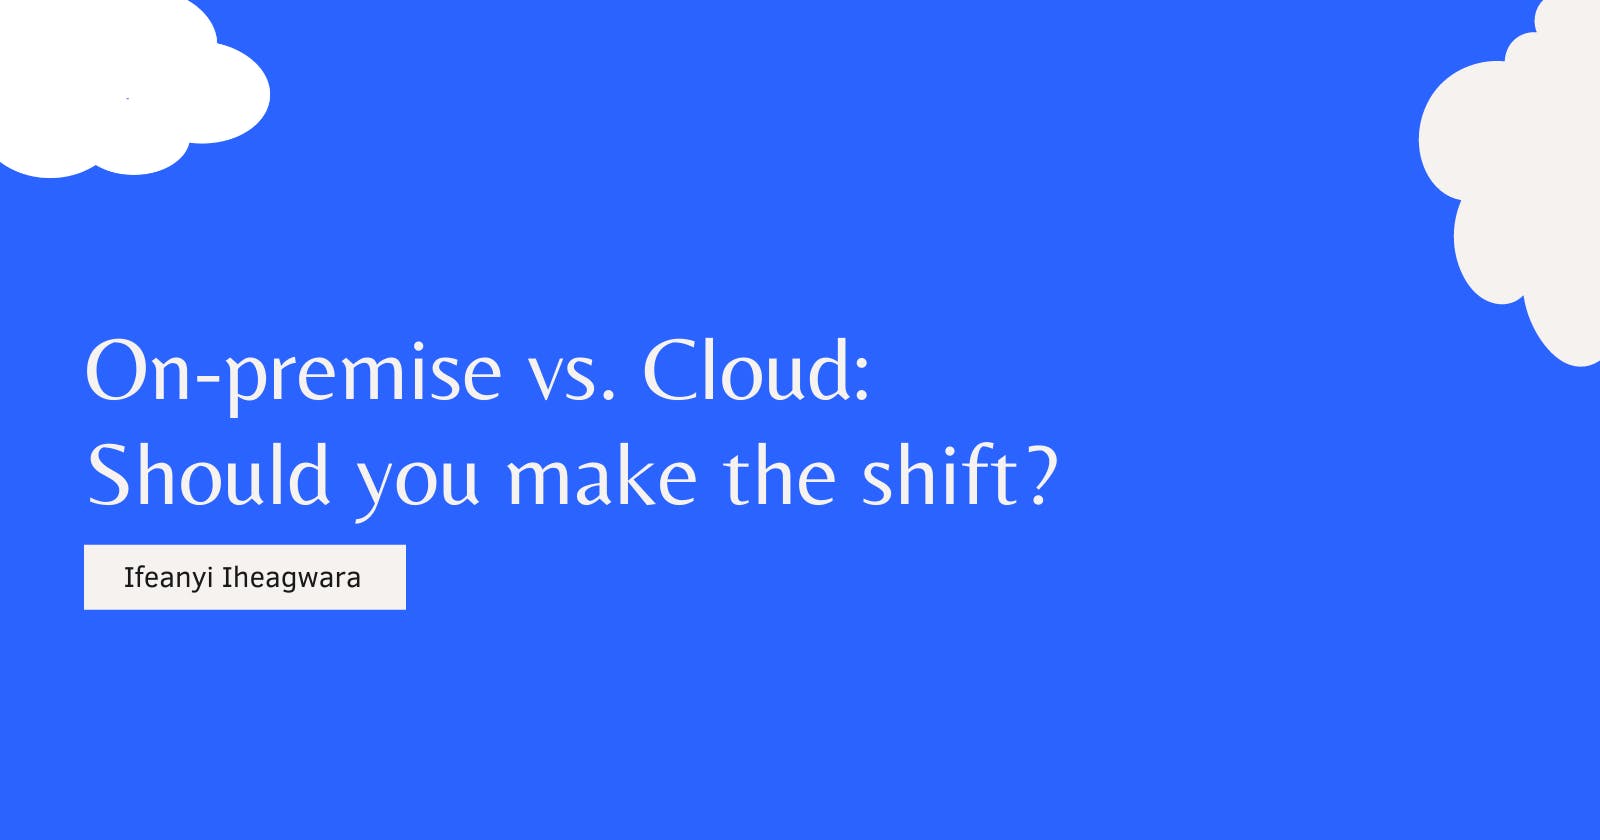 On-premise vs. Cloud: Should you make the shift?